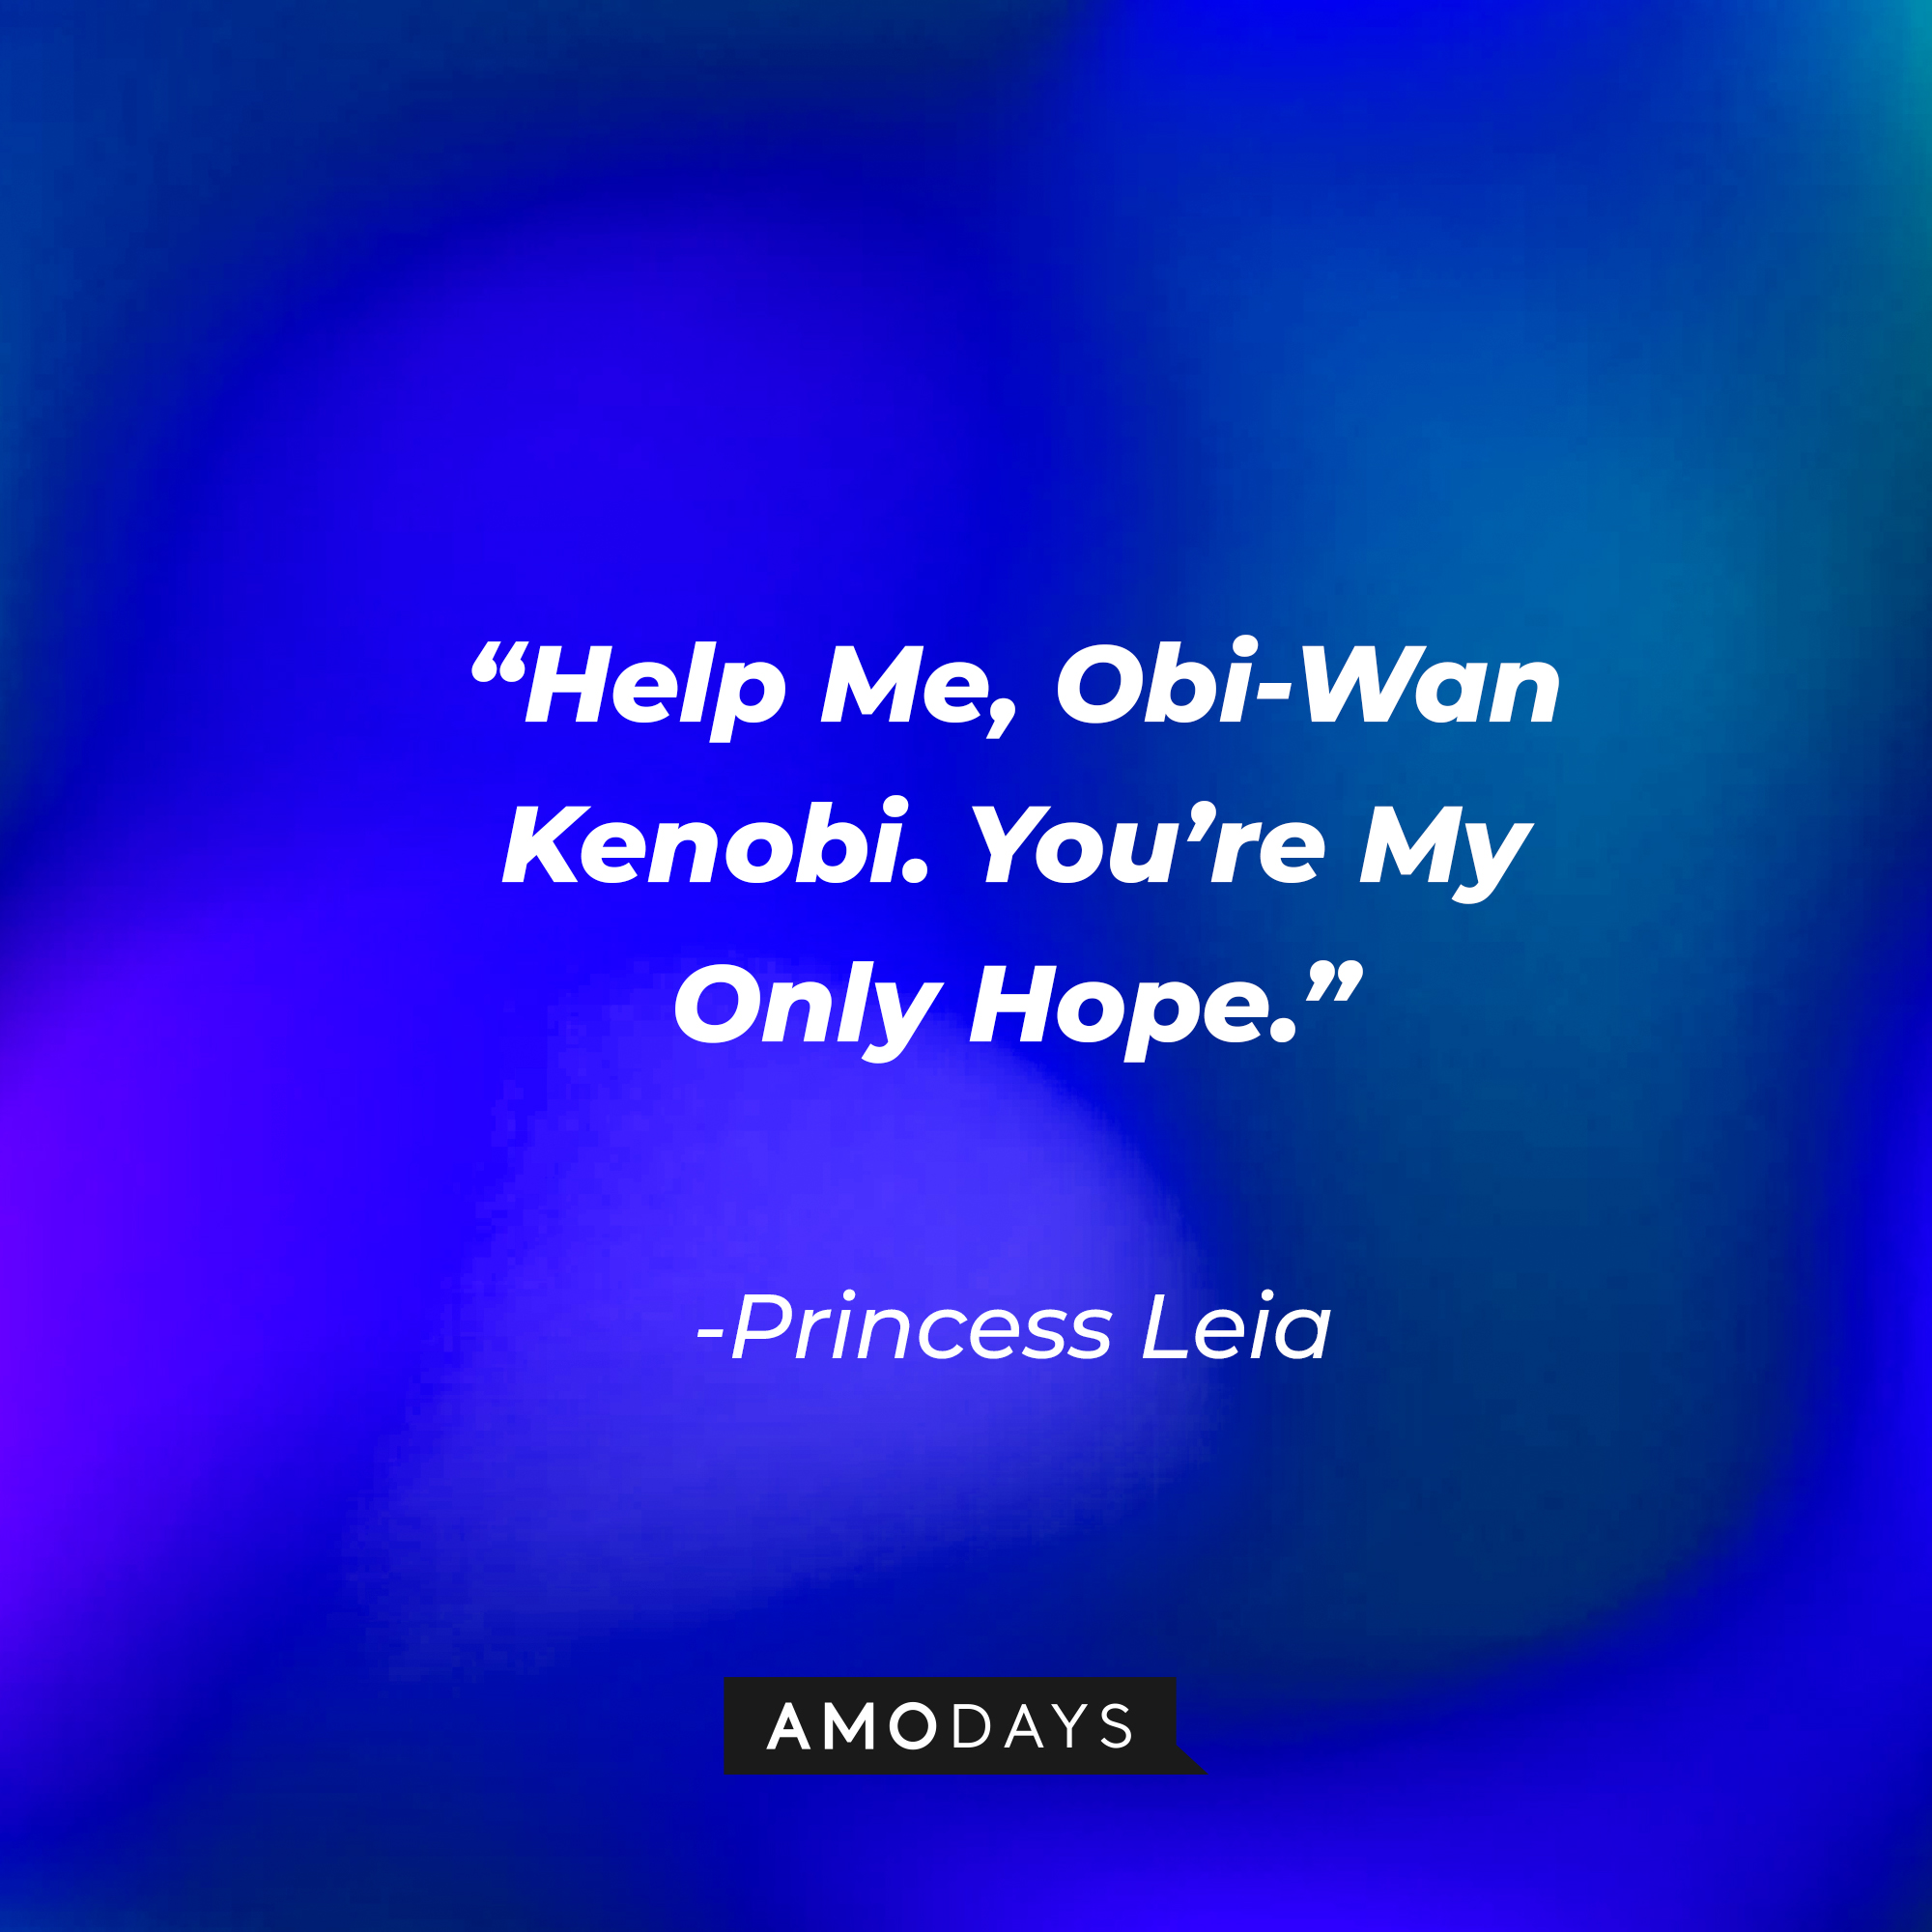 Princess Leia's quote: "Help Me, Obi-Wan Kenobi. You're My Only Hope." | Source: facebook.com/StarWars